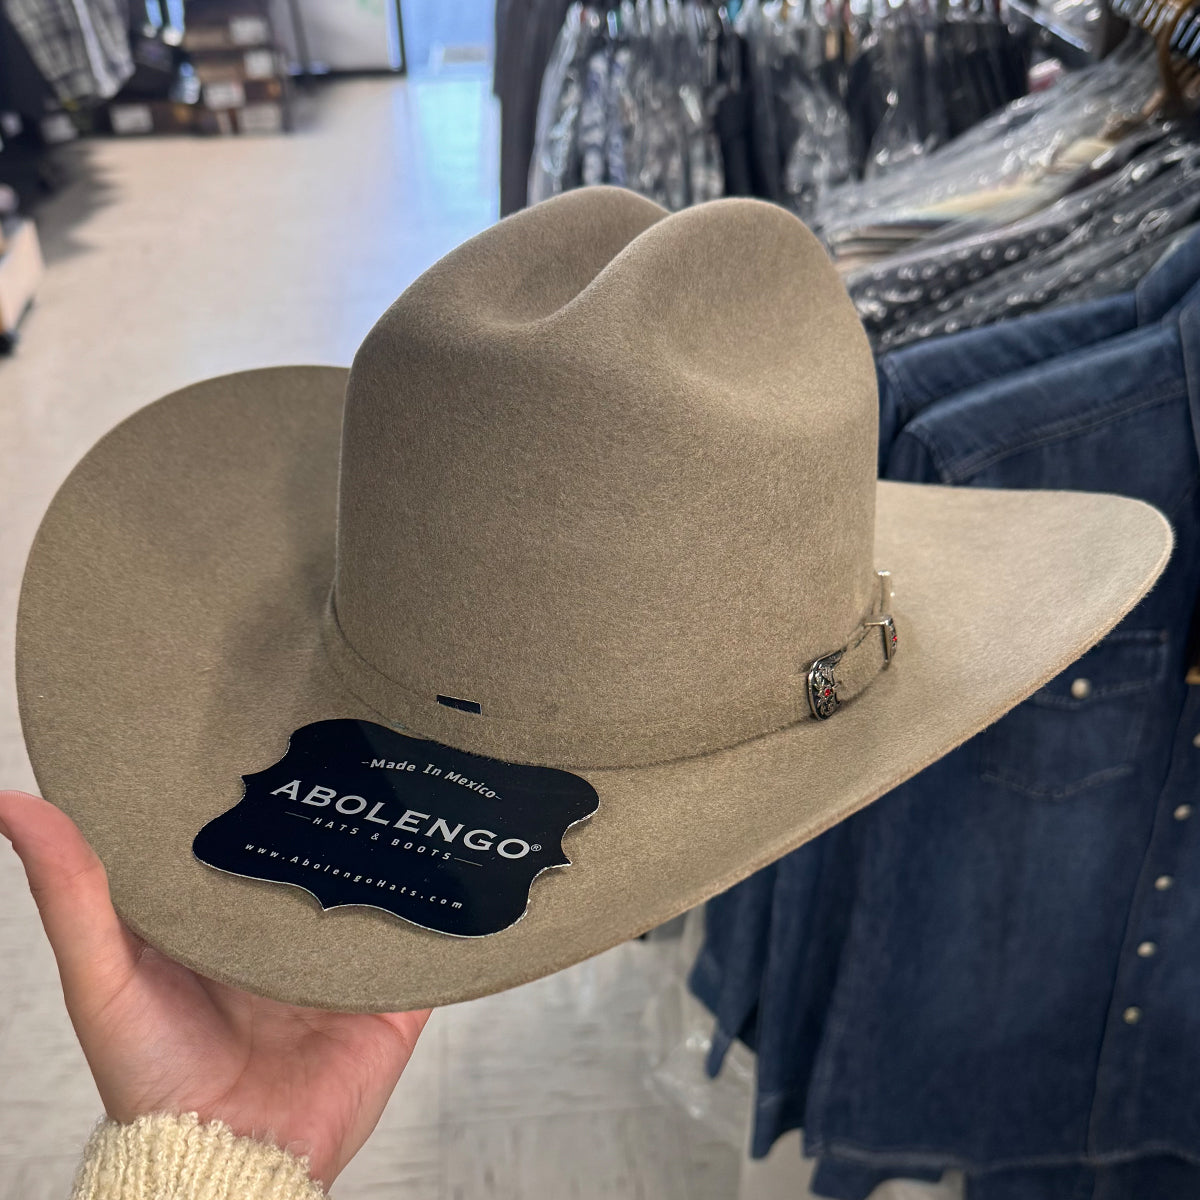 Abolengo Sinaloa 1000x Natural Cowboy Felt Hat